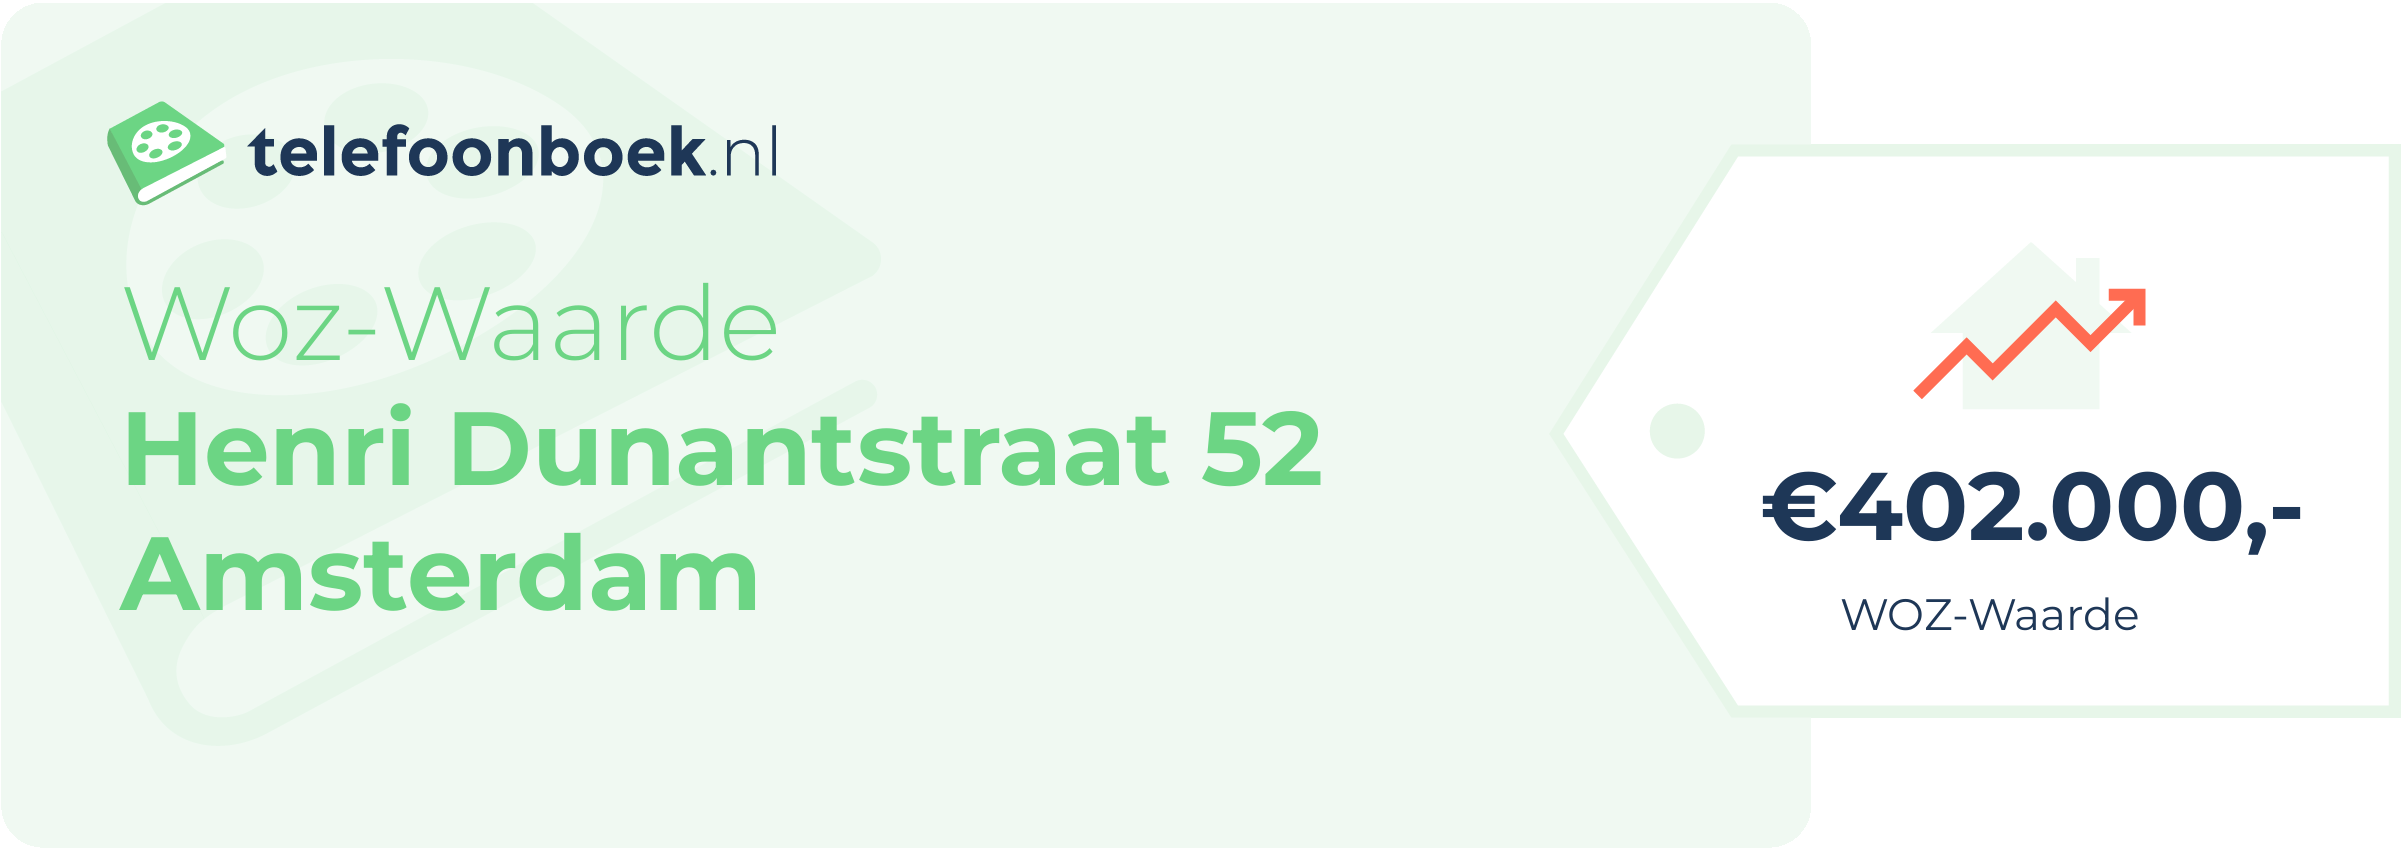 WOZ-waarde Henri Dunantstraat 52 Amsterdam